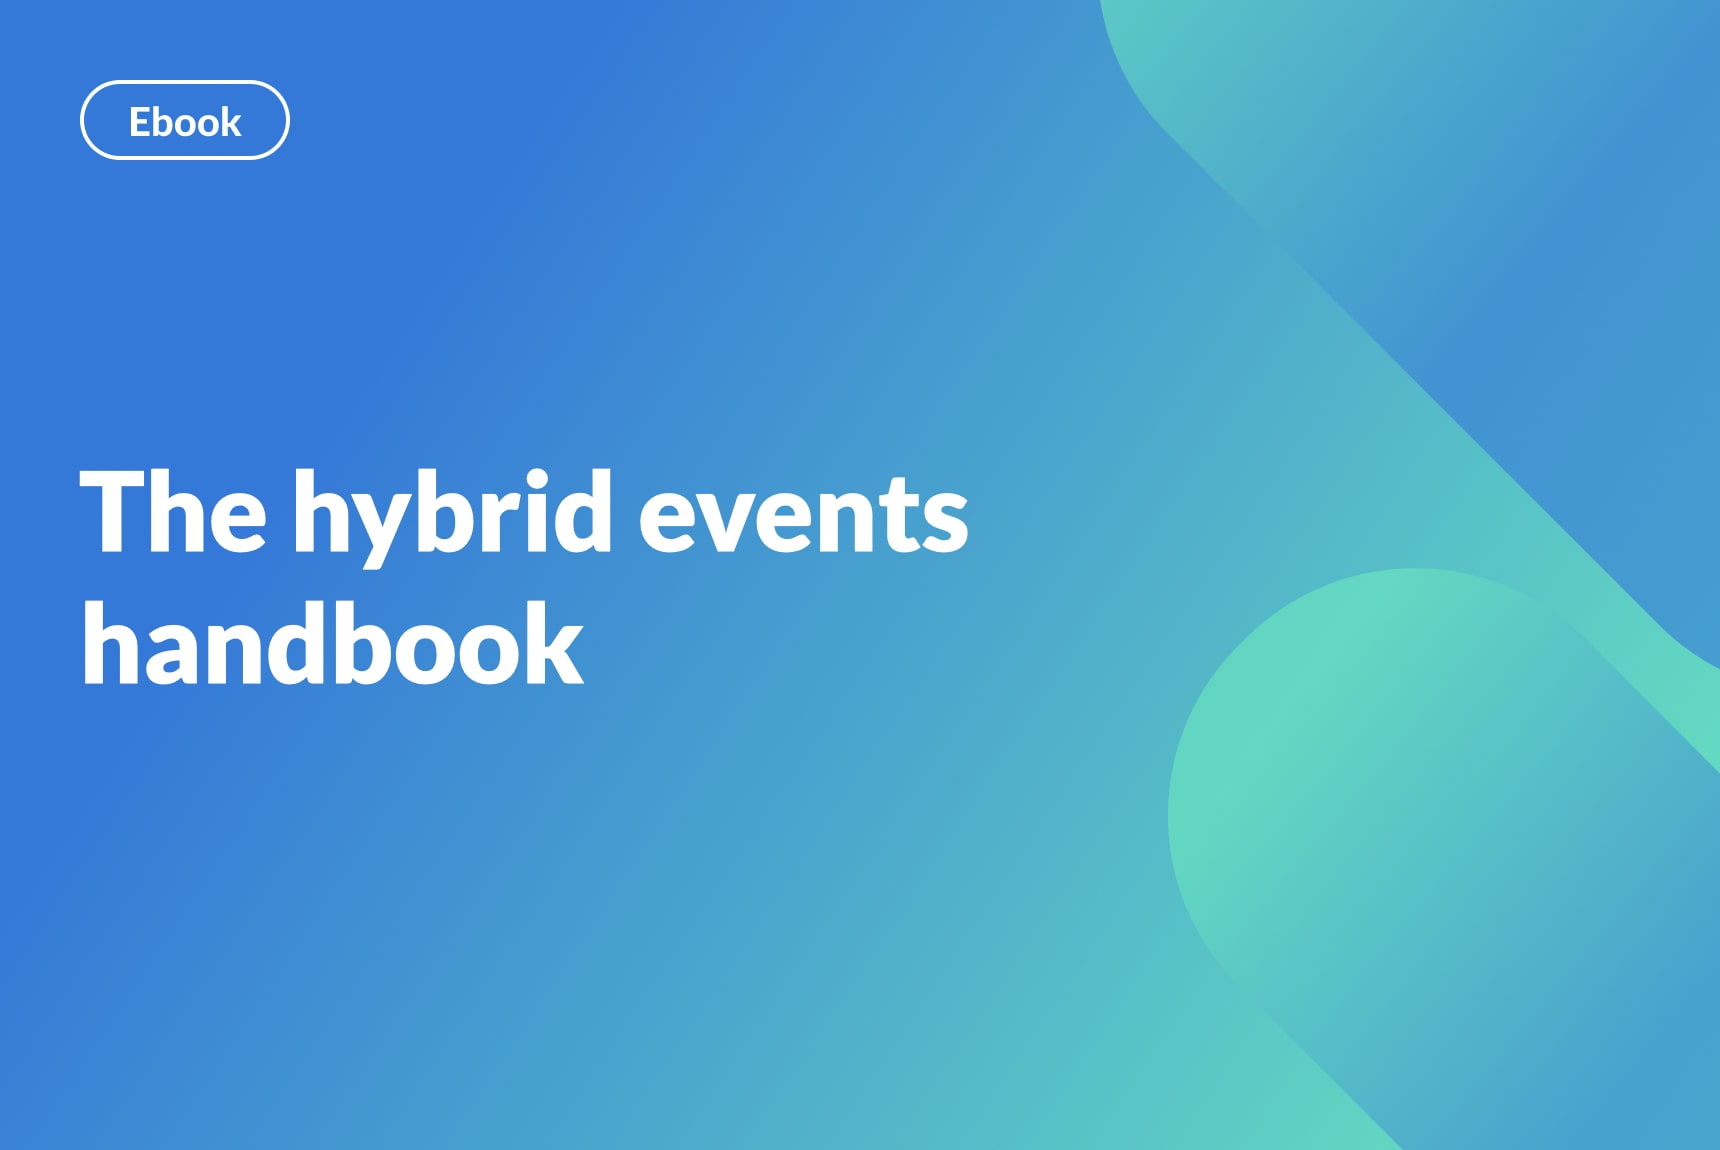 The hybrid events handbook